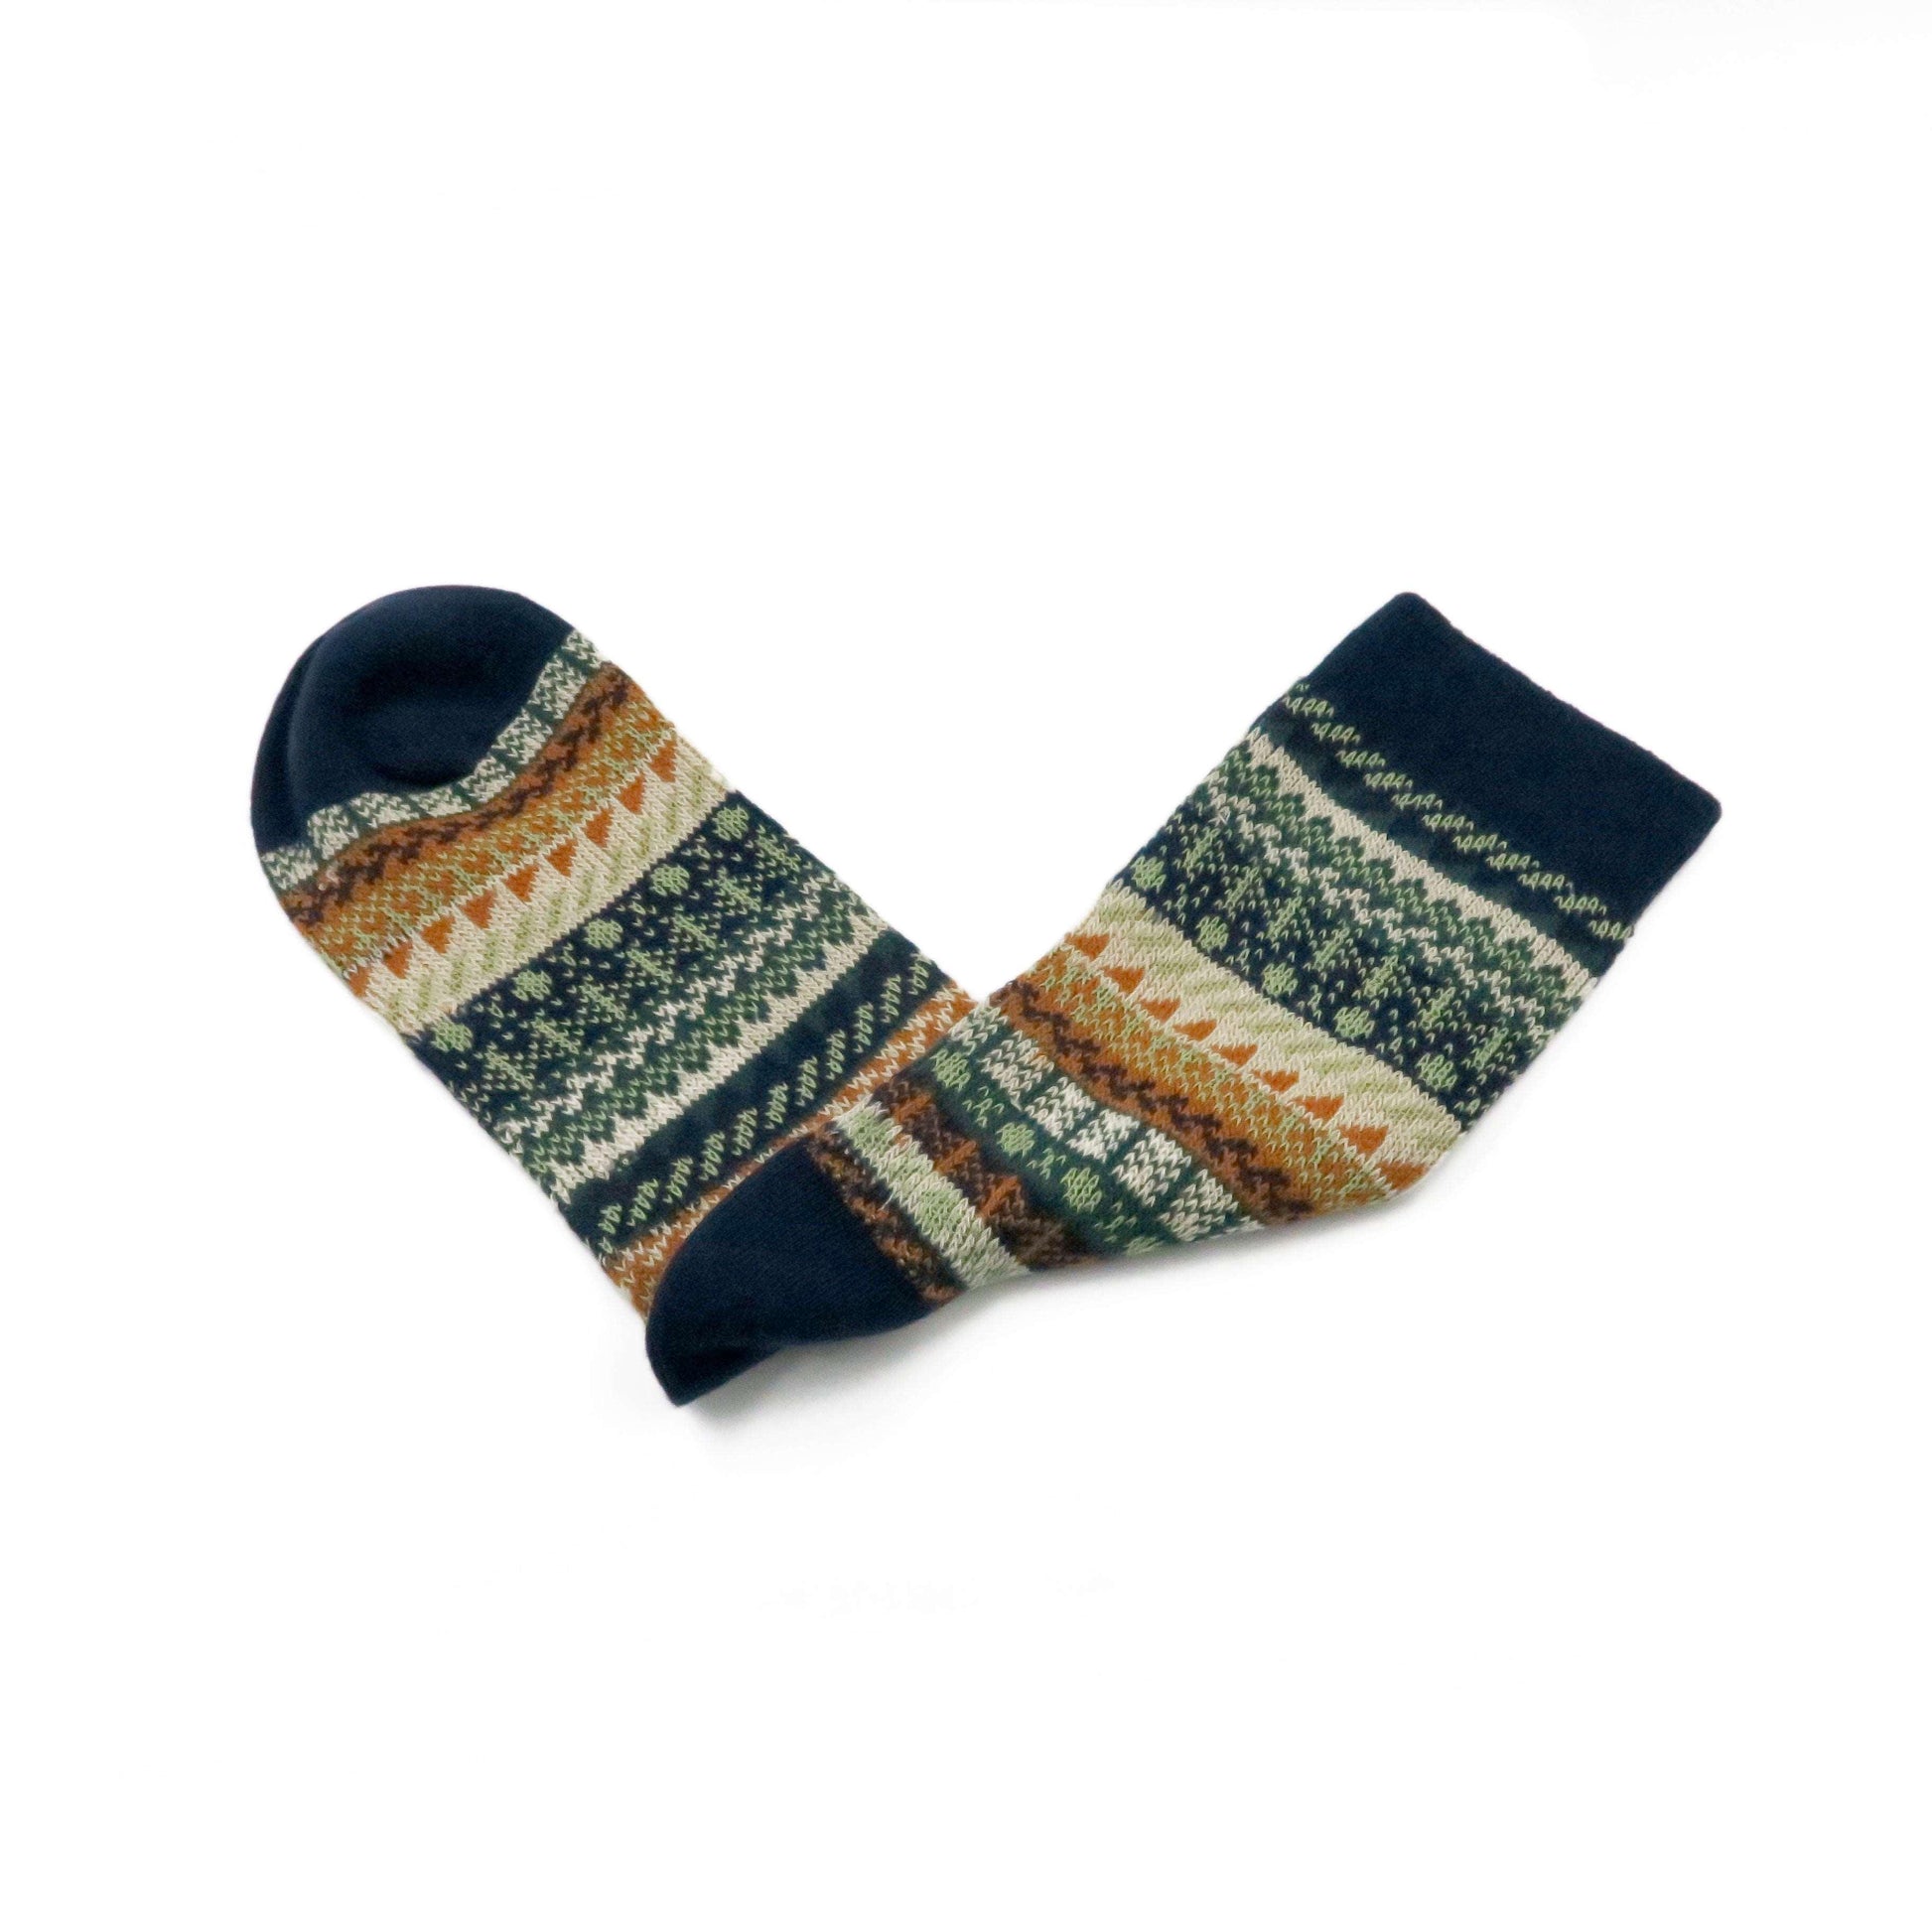 carousel navy socks - tribal pattern comfysocks